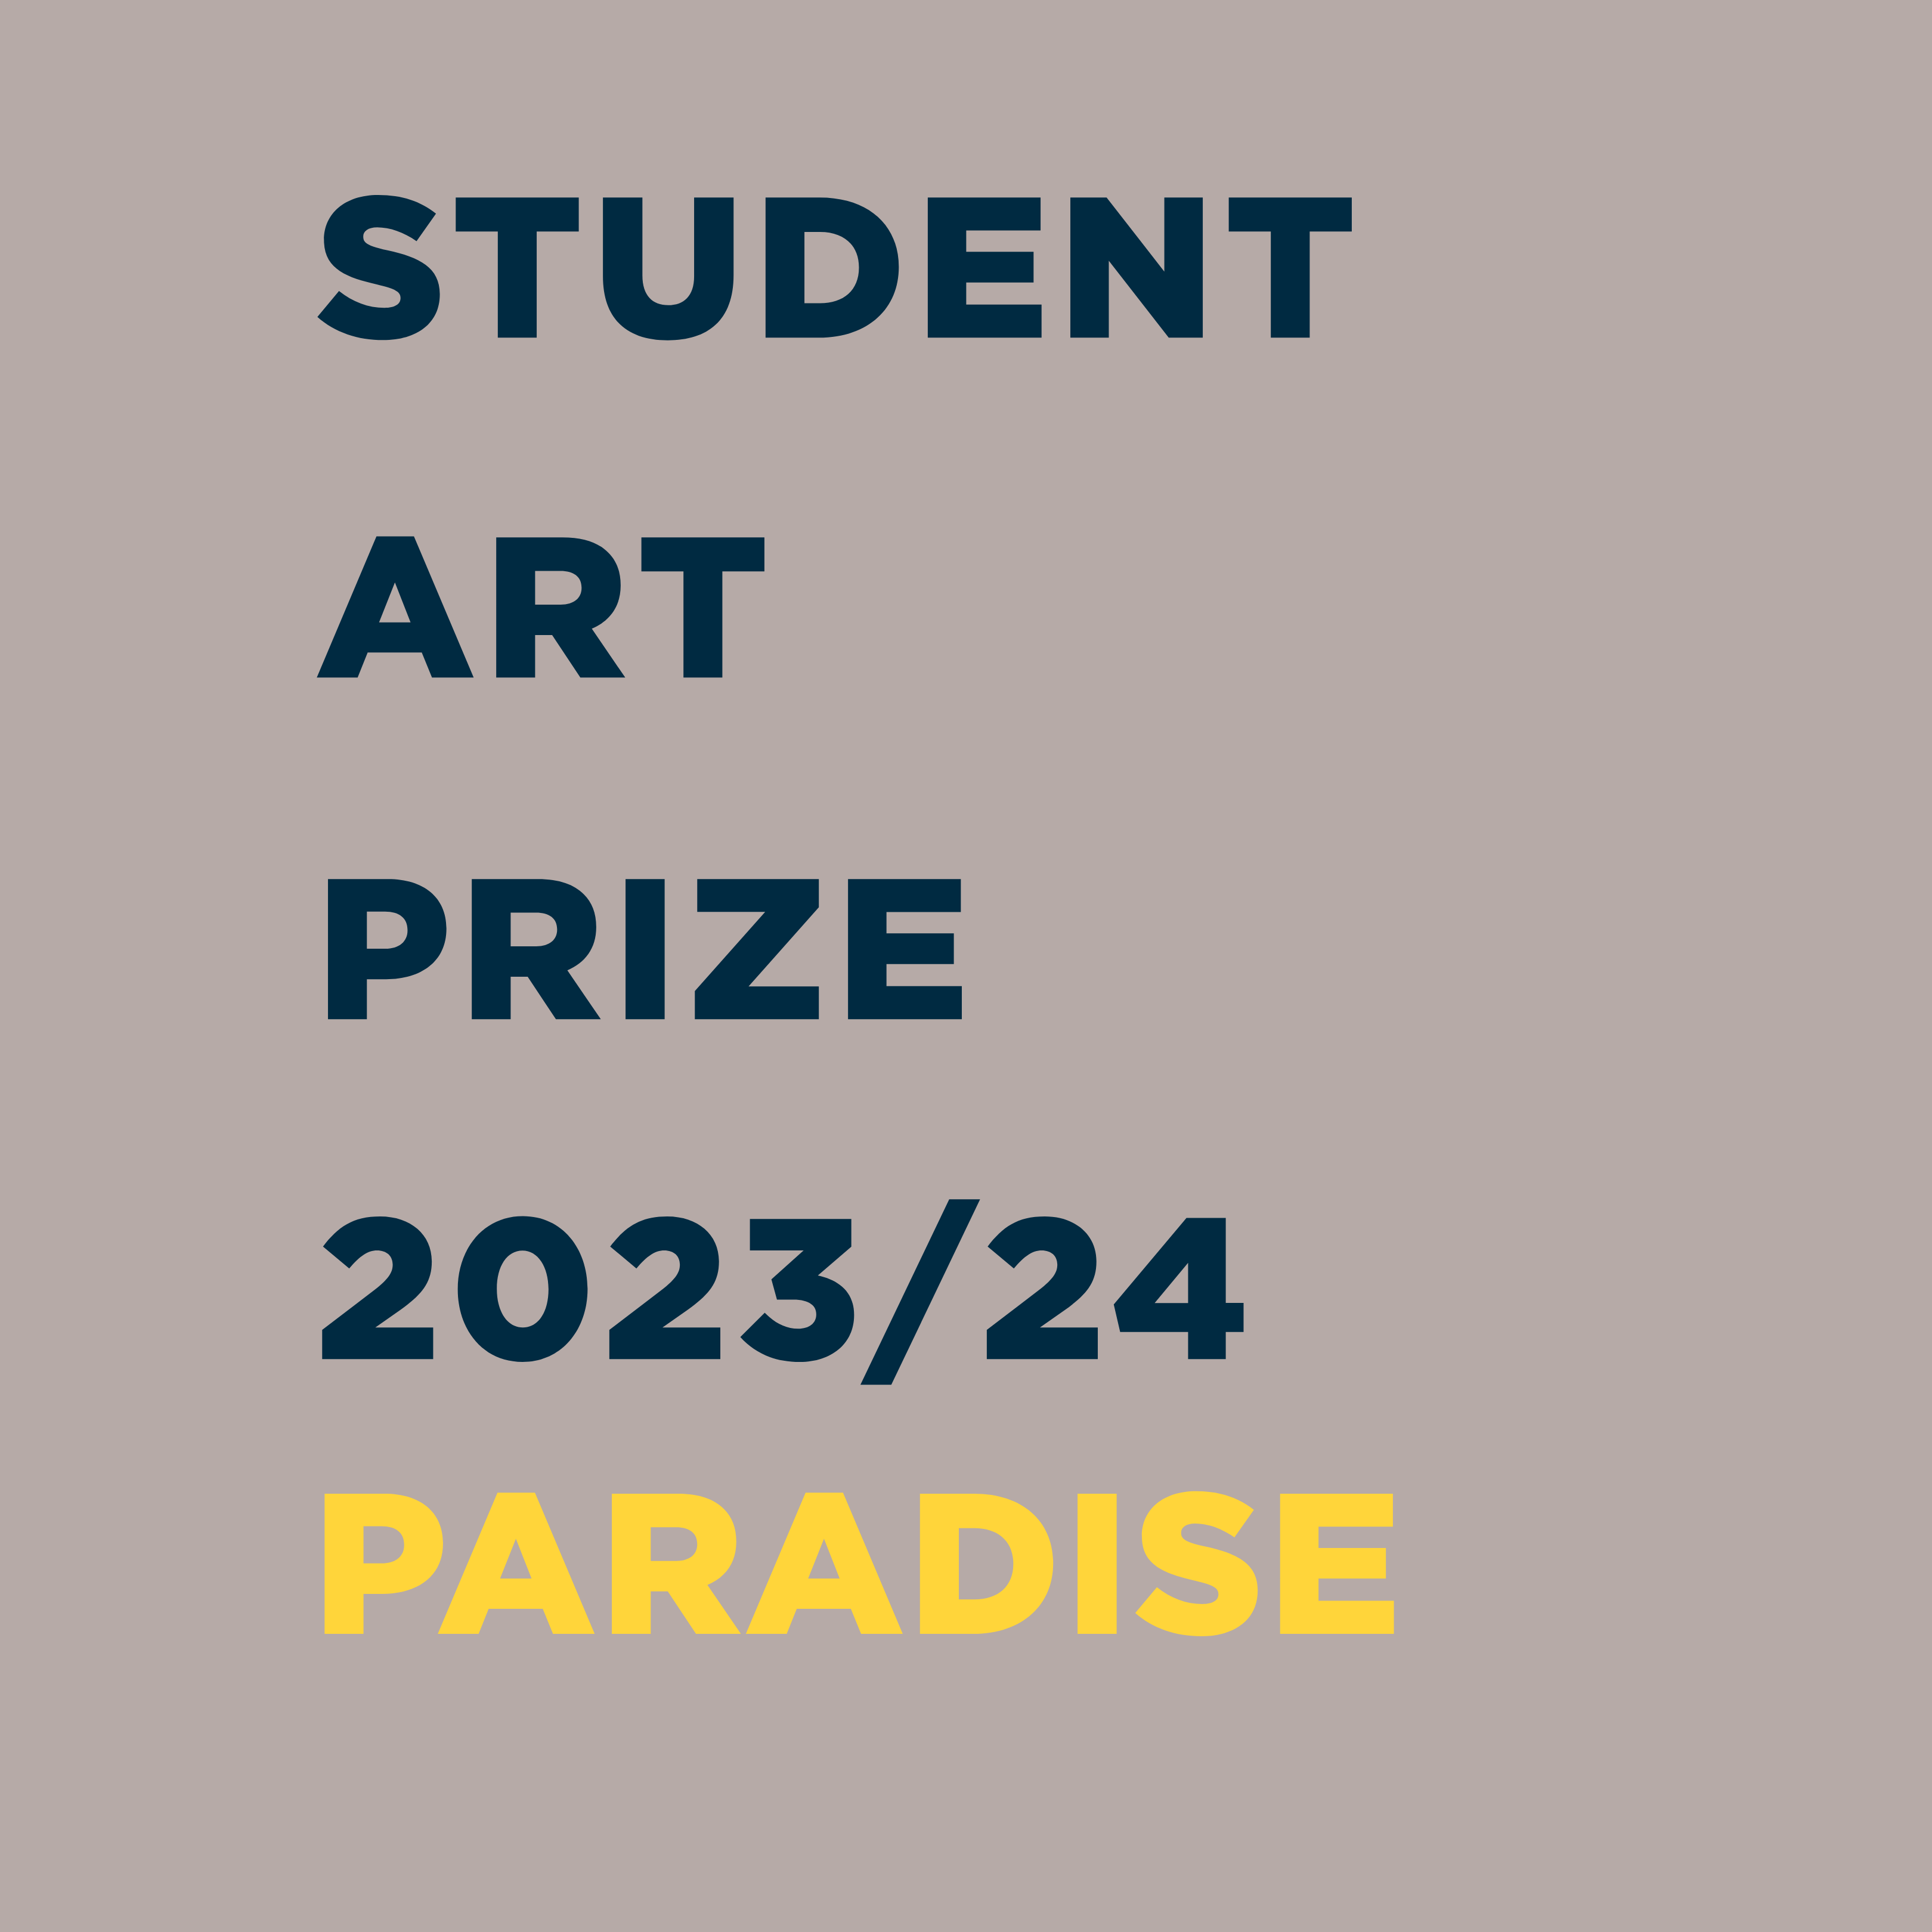 Student Art Prize 2023/24 Paradise